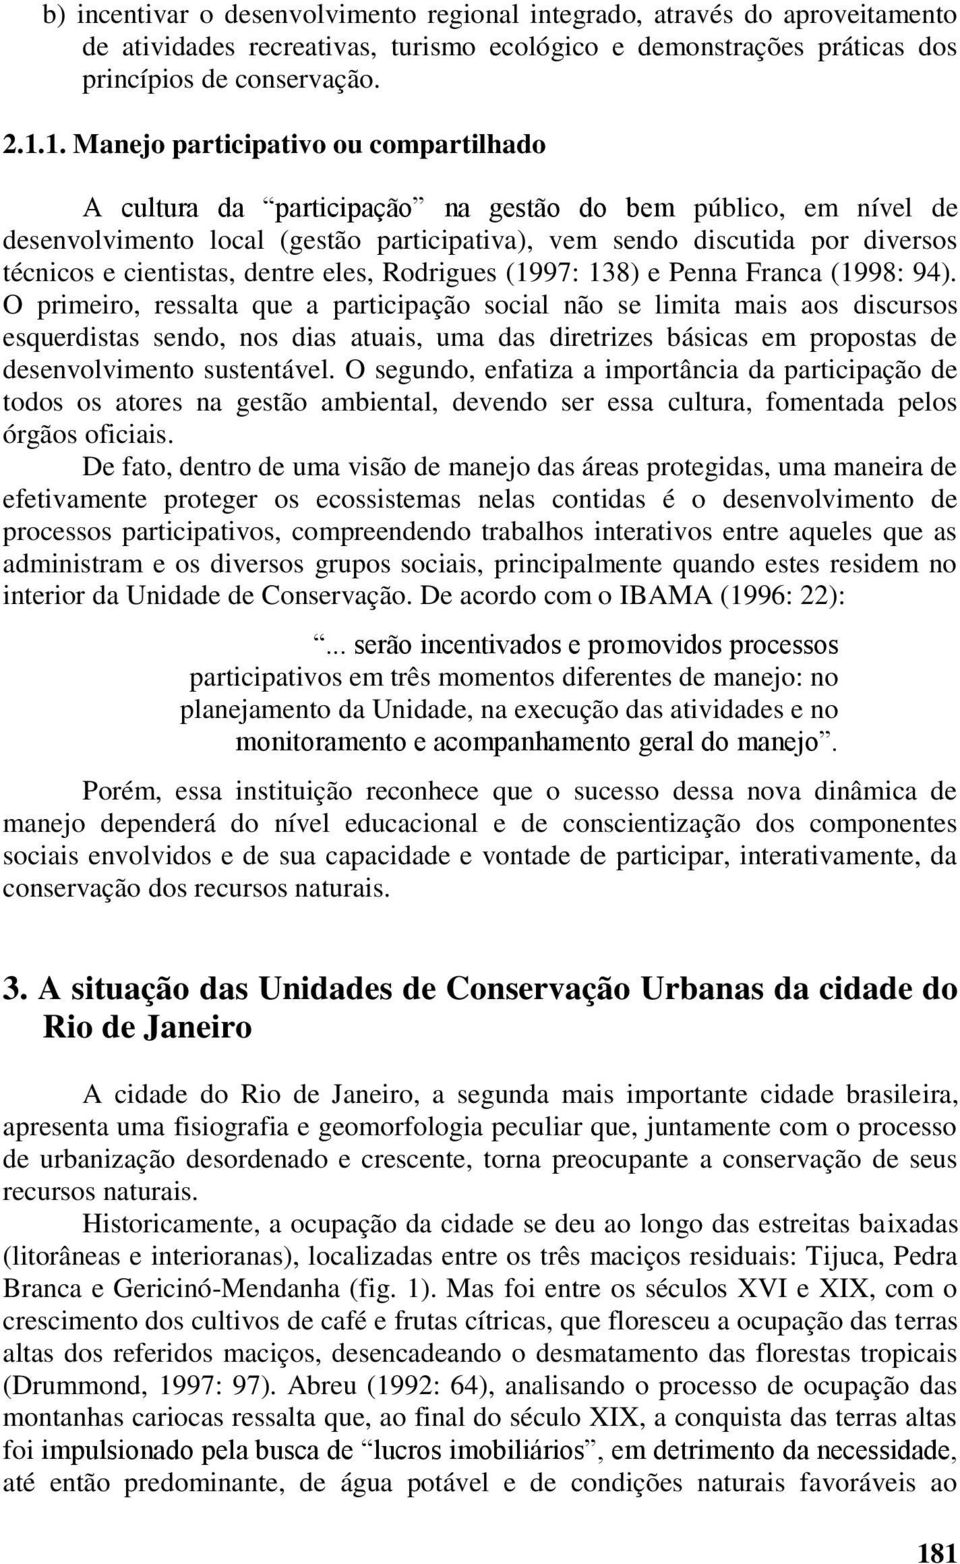 cientistas, dentre eles, Rodrigues (1997: 138) e Penna Franca (1998: 94).